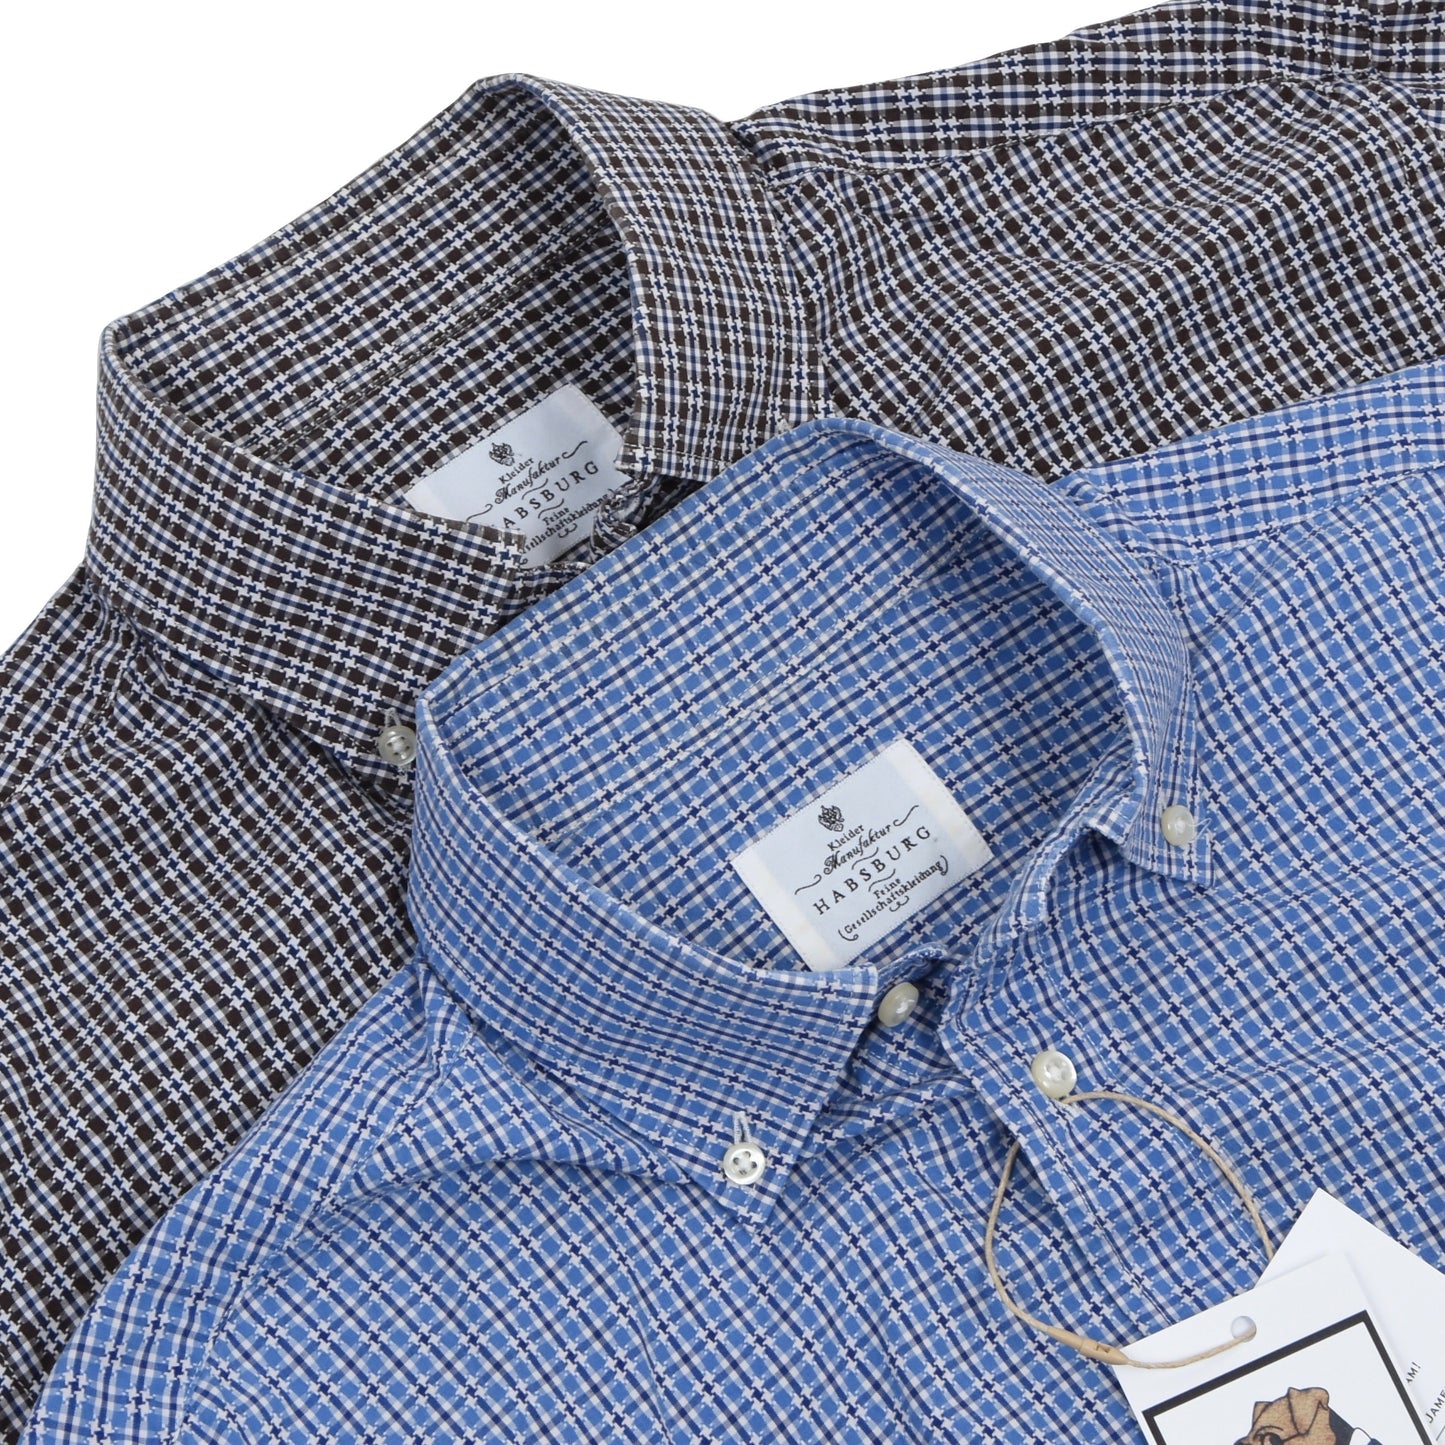 2x Kleidermanufaktur Habsburg Shirts Size 41 - Blue/Brown Plaid